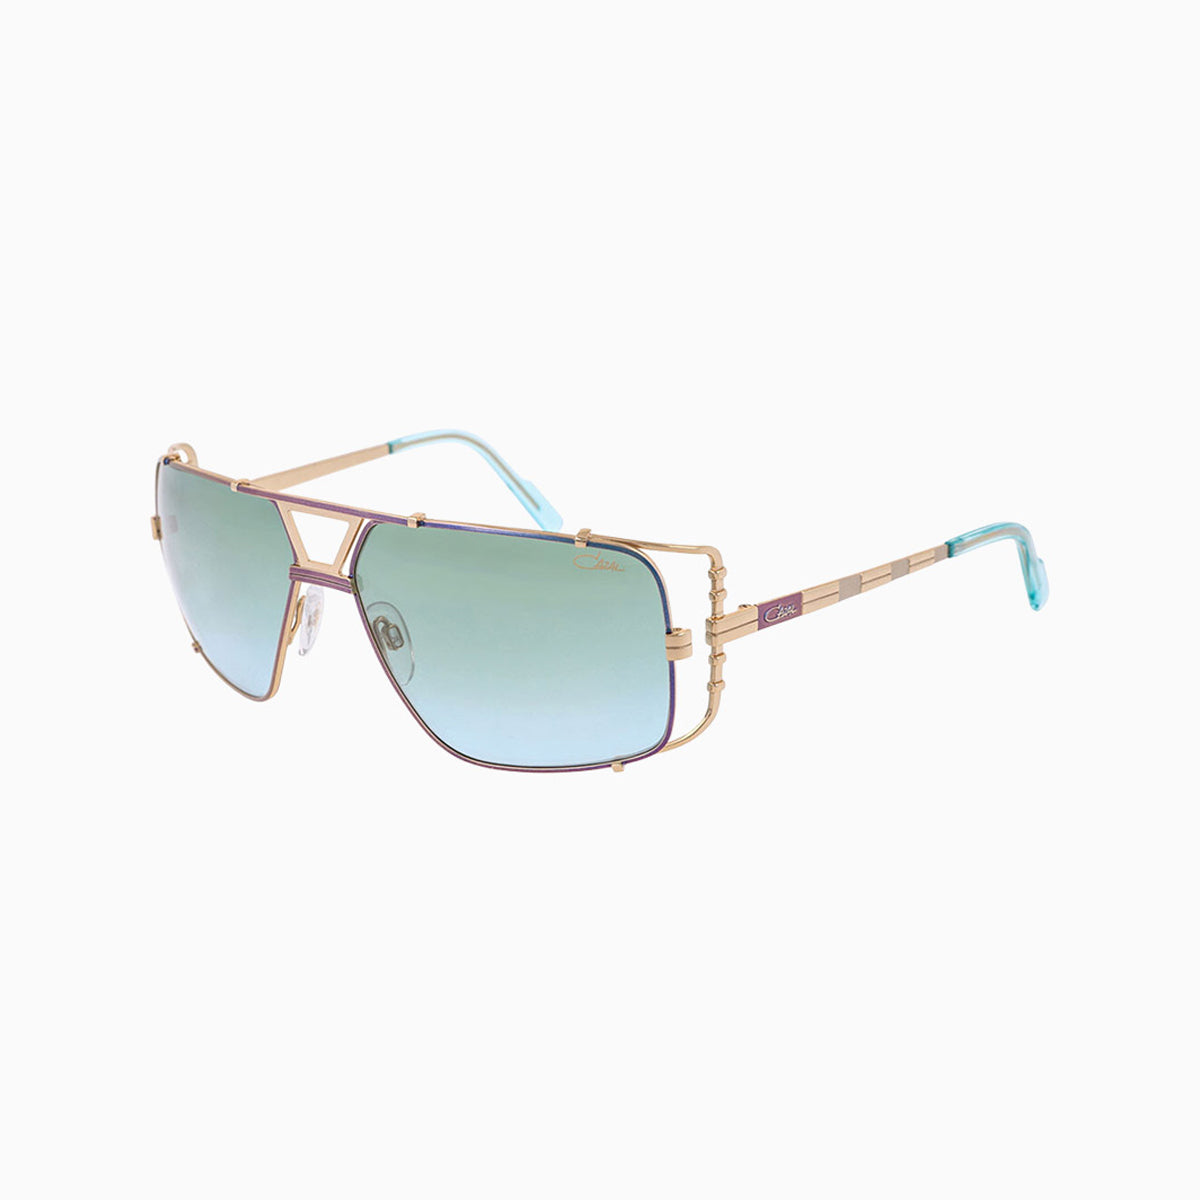 cazal-eyewear-mens-cazal-9093-001-turquoise-green-sunglasses-cz0909362001